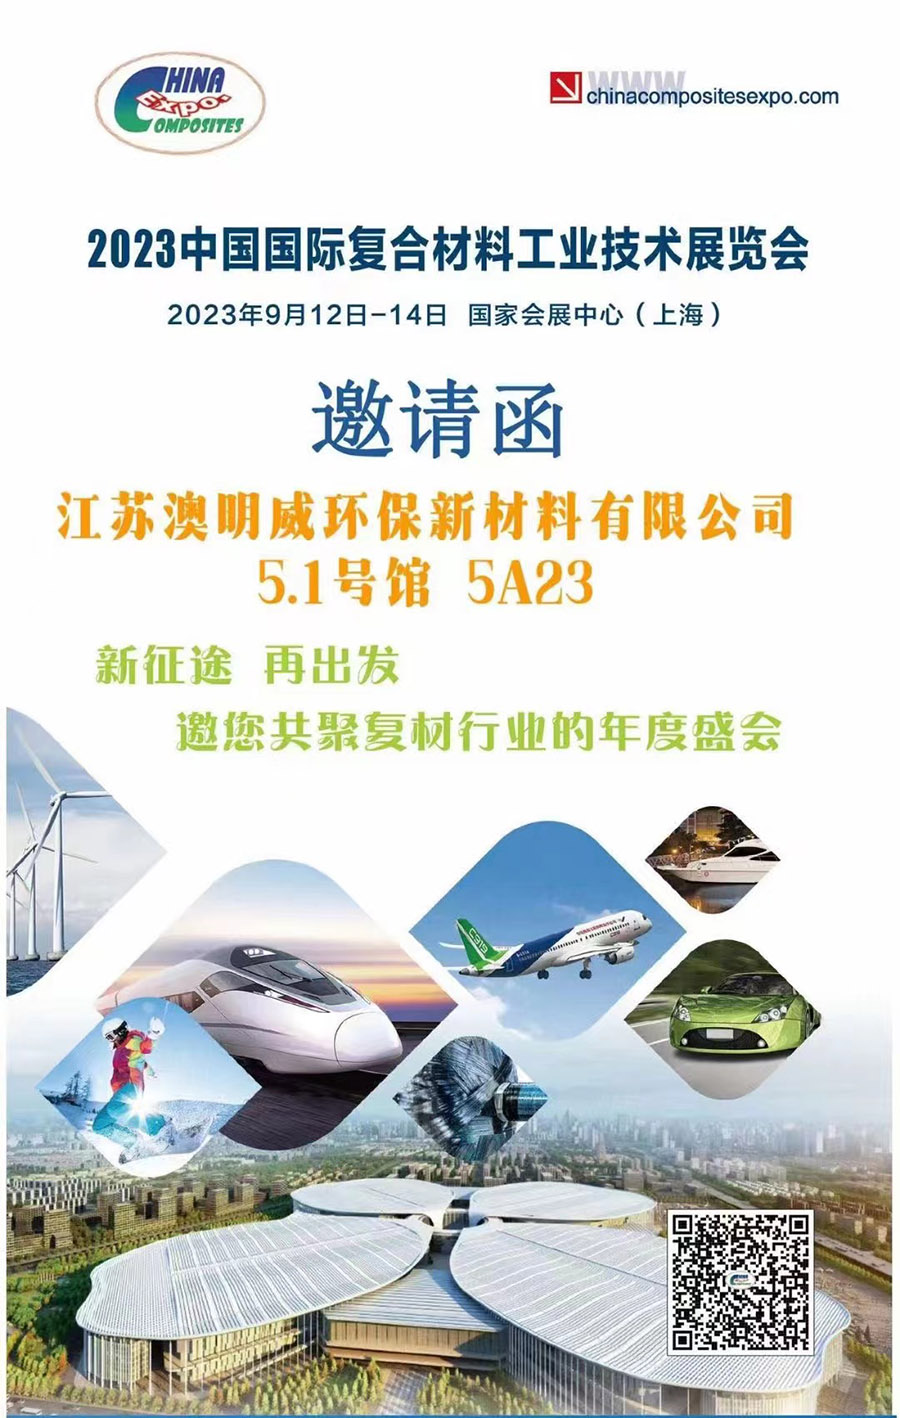 2023 China International Composites Industry Technology Fair